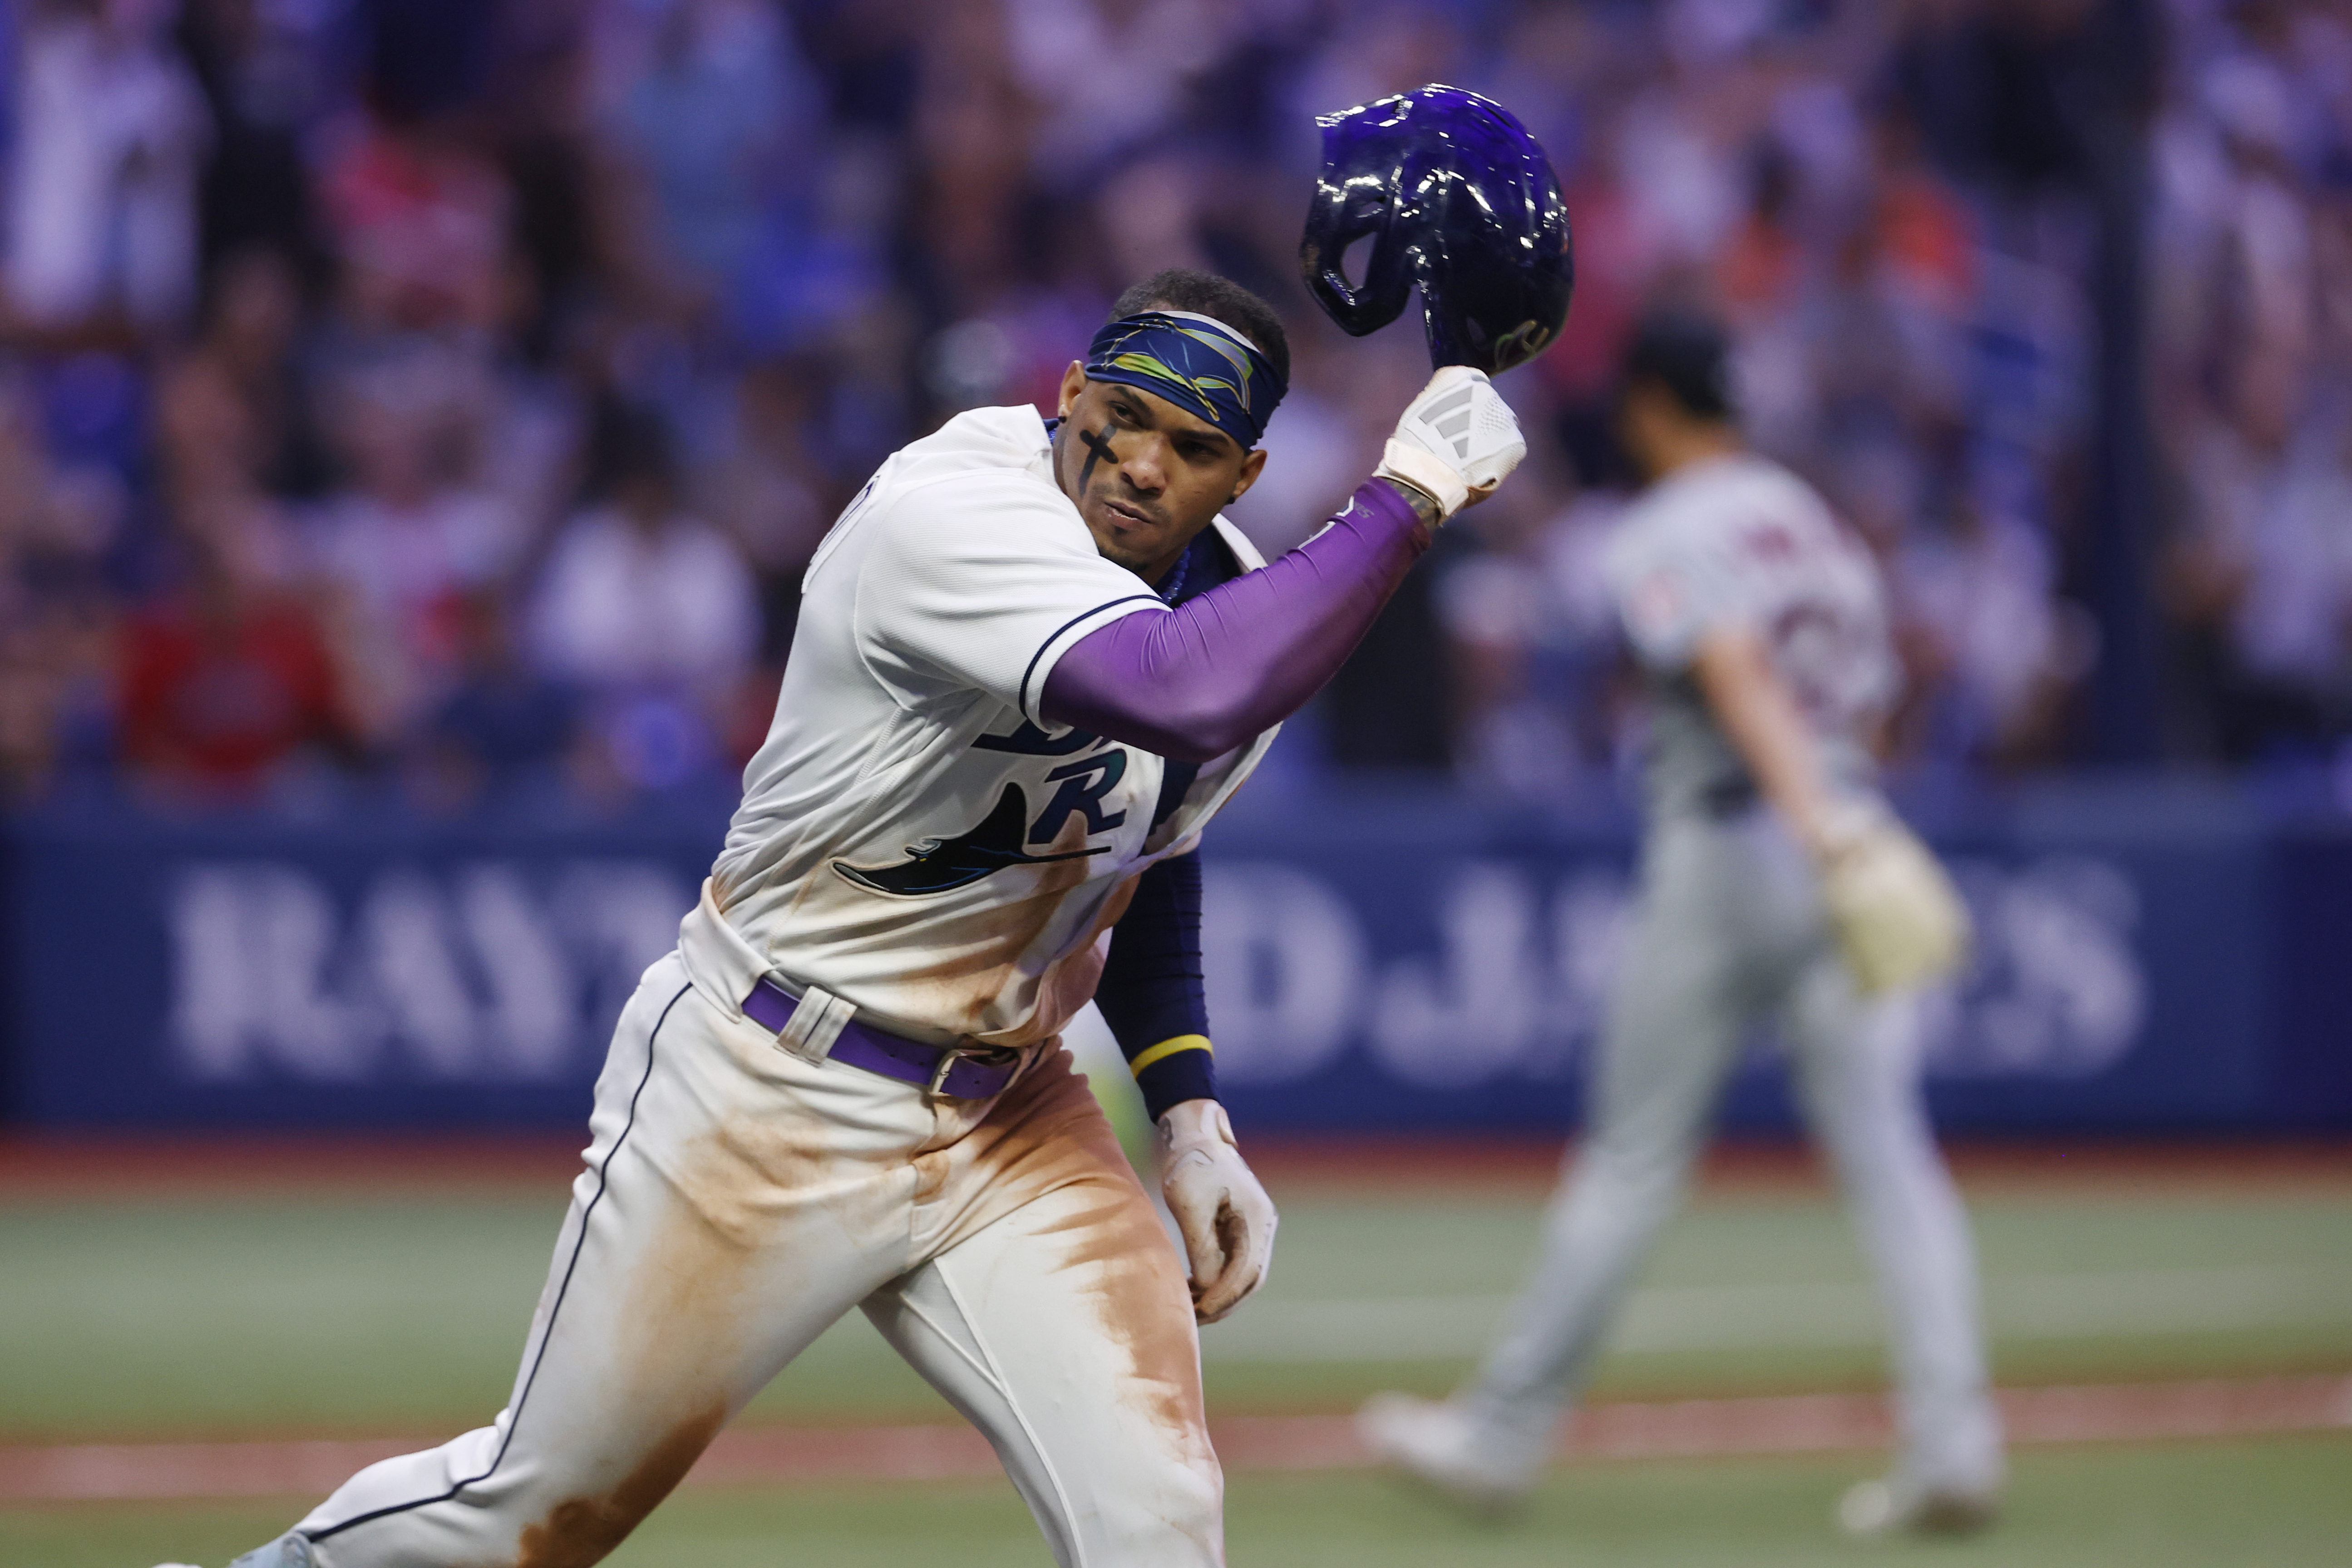 MLB investigating social media posts related to Rays shortstop Wander Franco